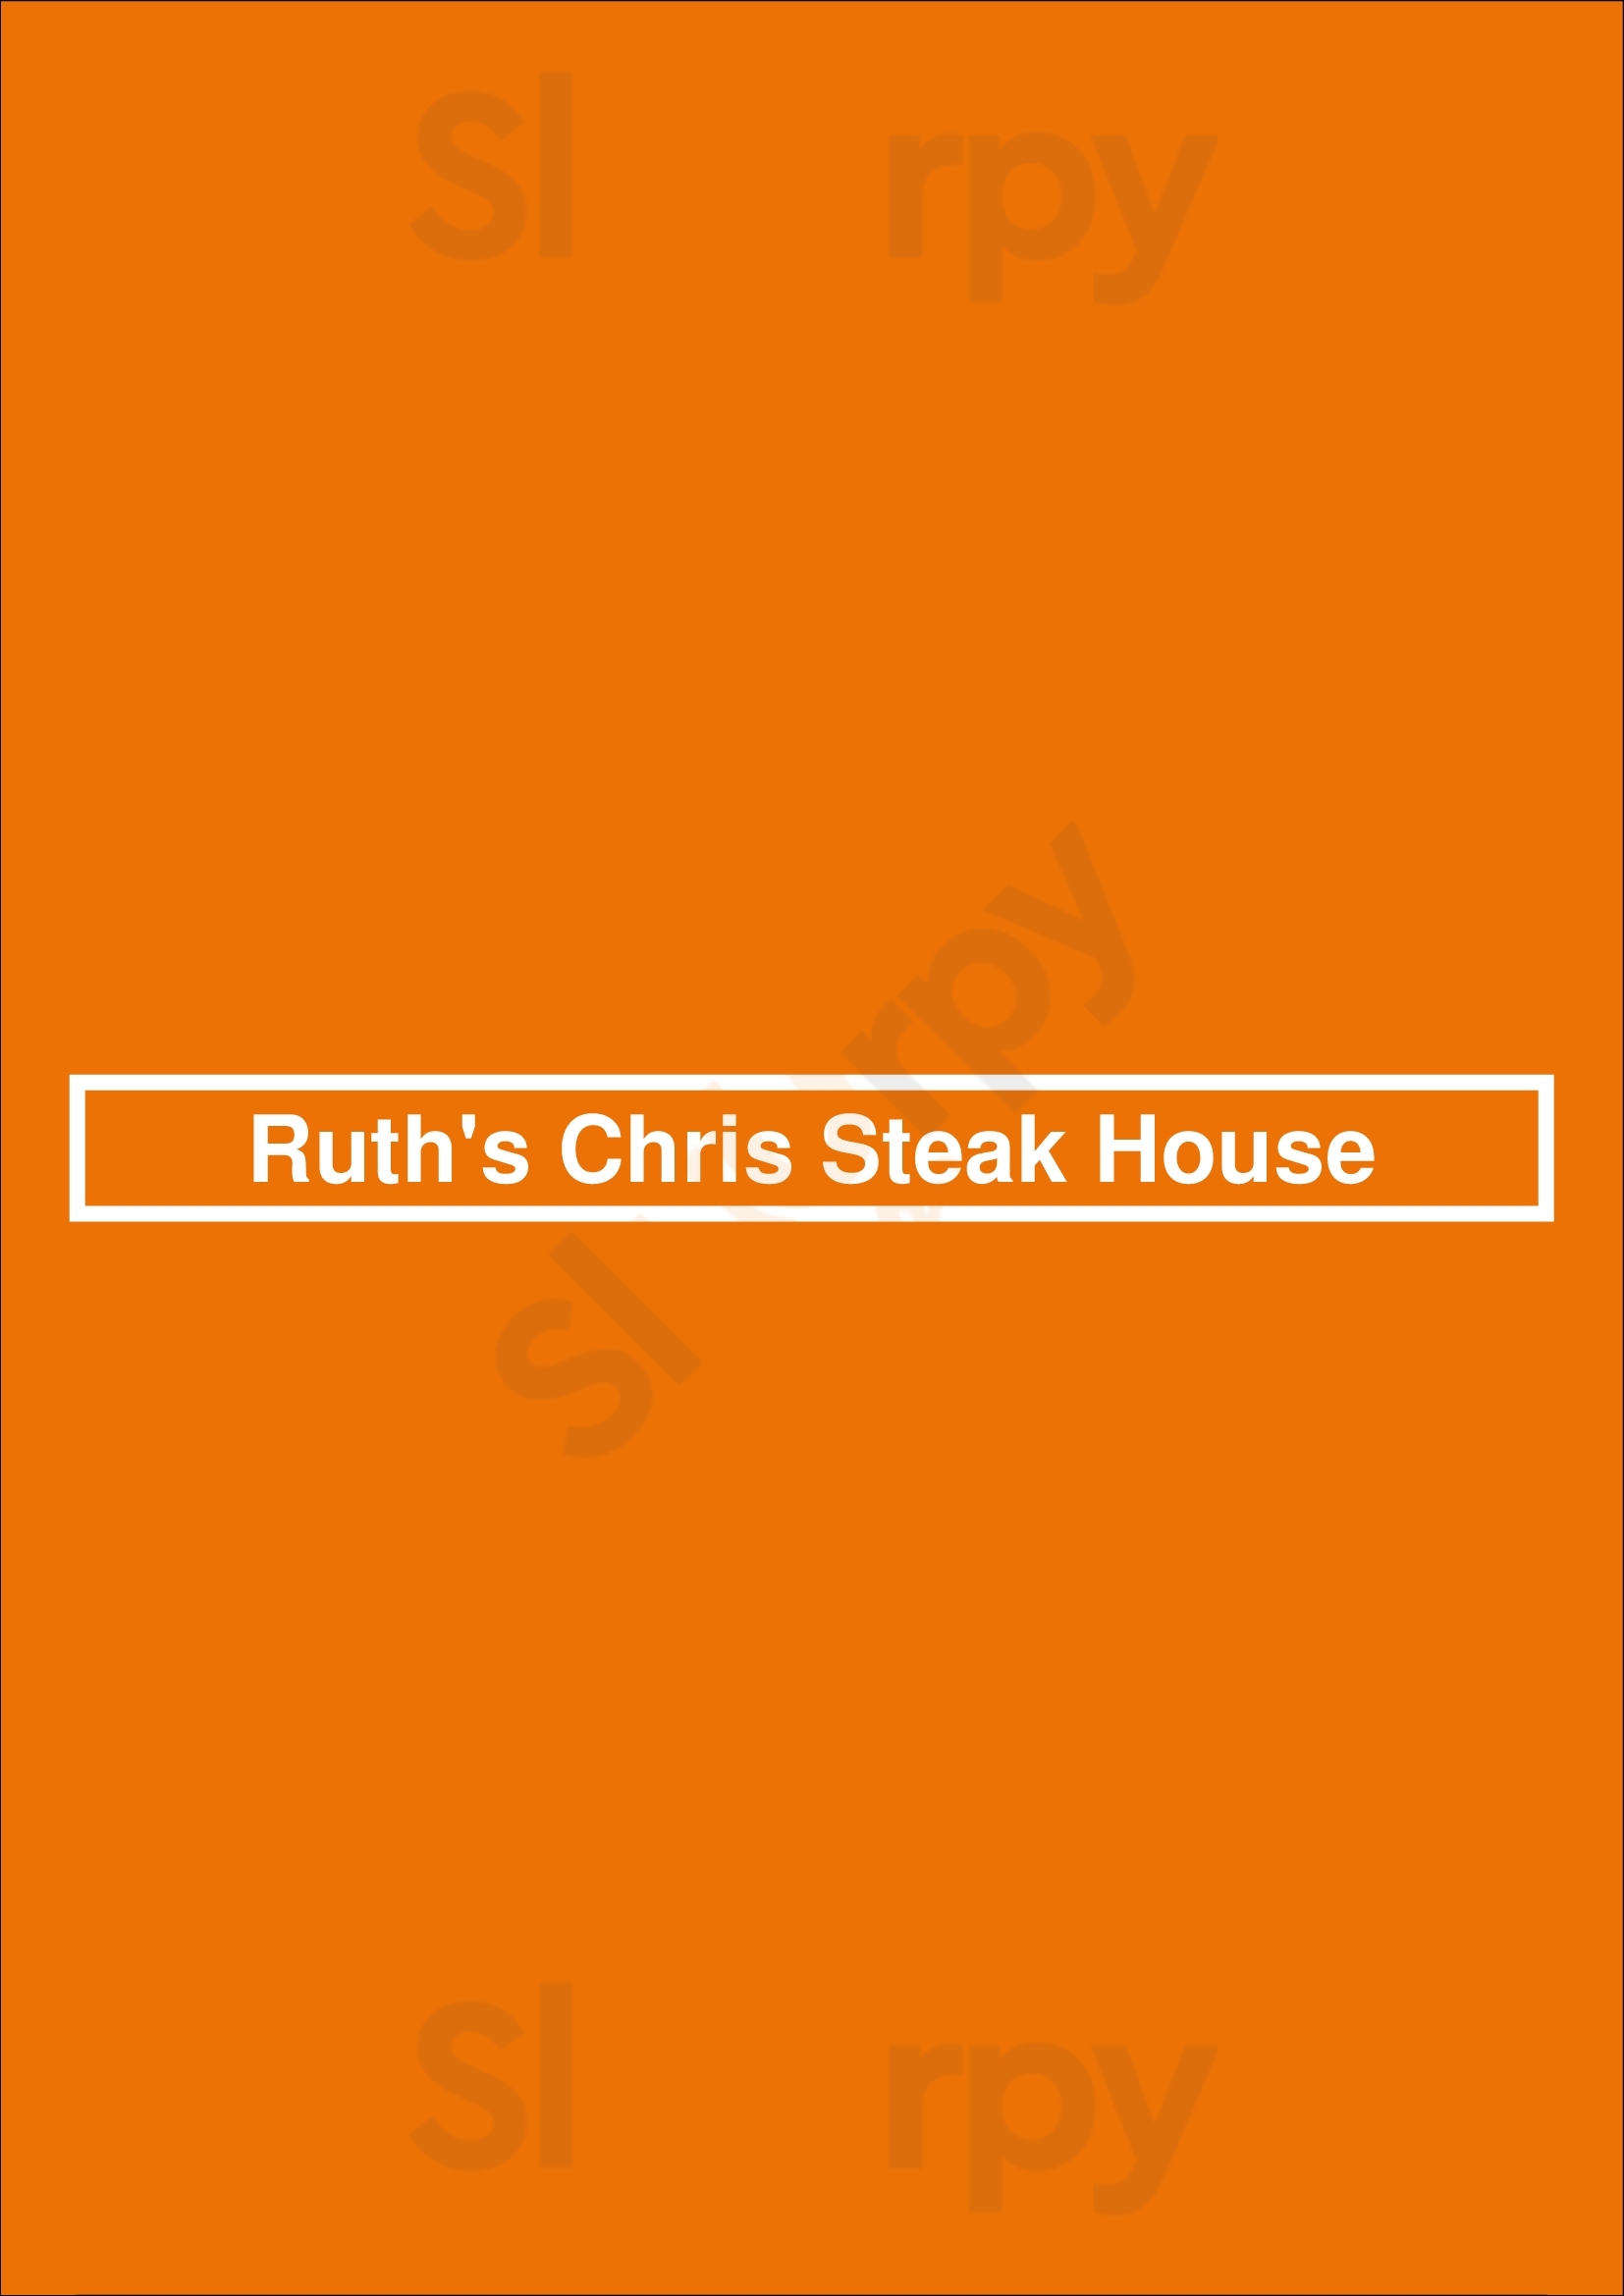 Ruth's Chris Steak House San Antonio Menu - 1